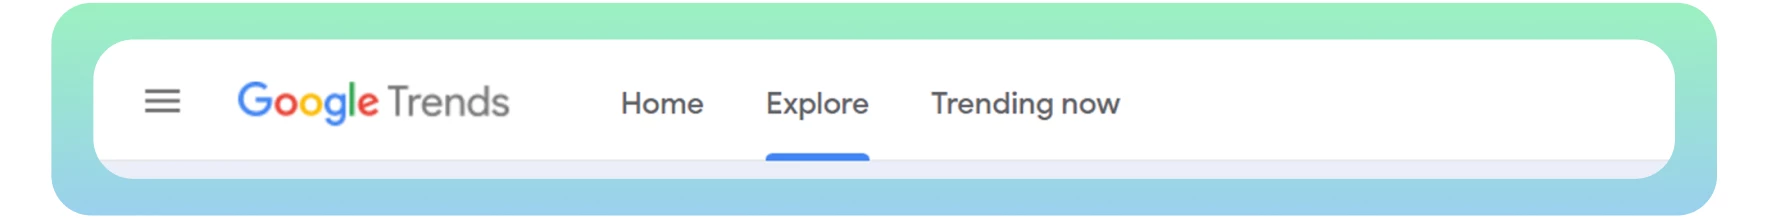 Google Trends explore tab